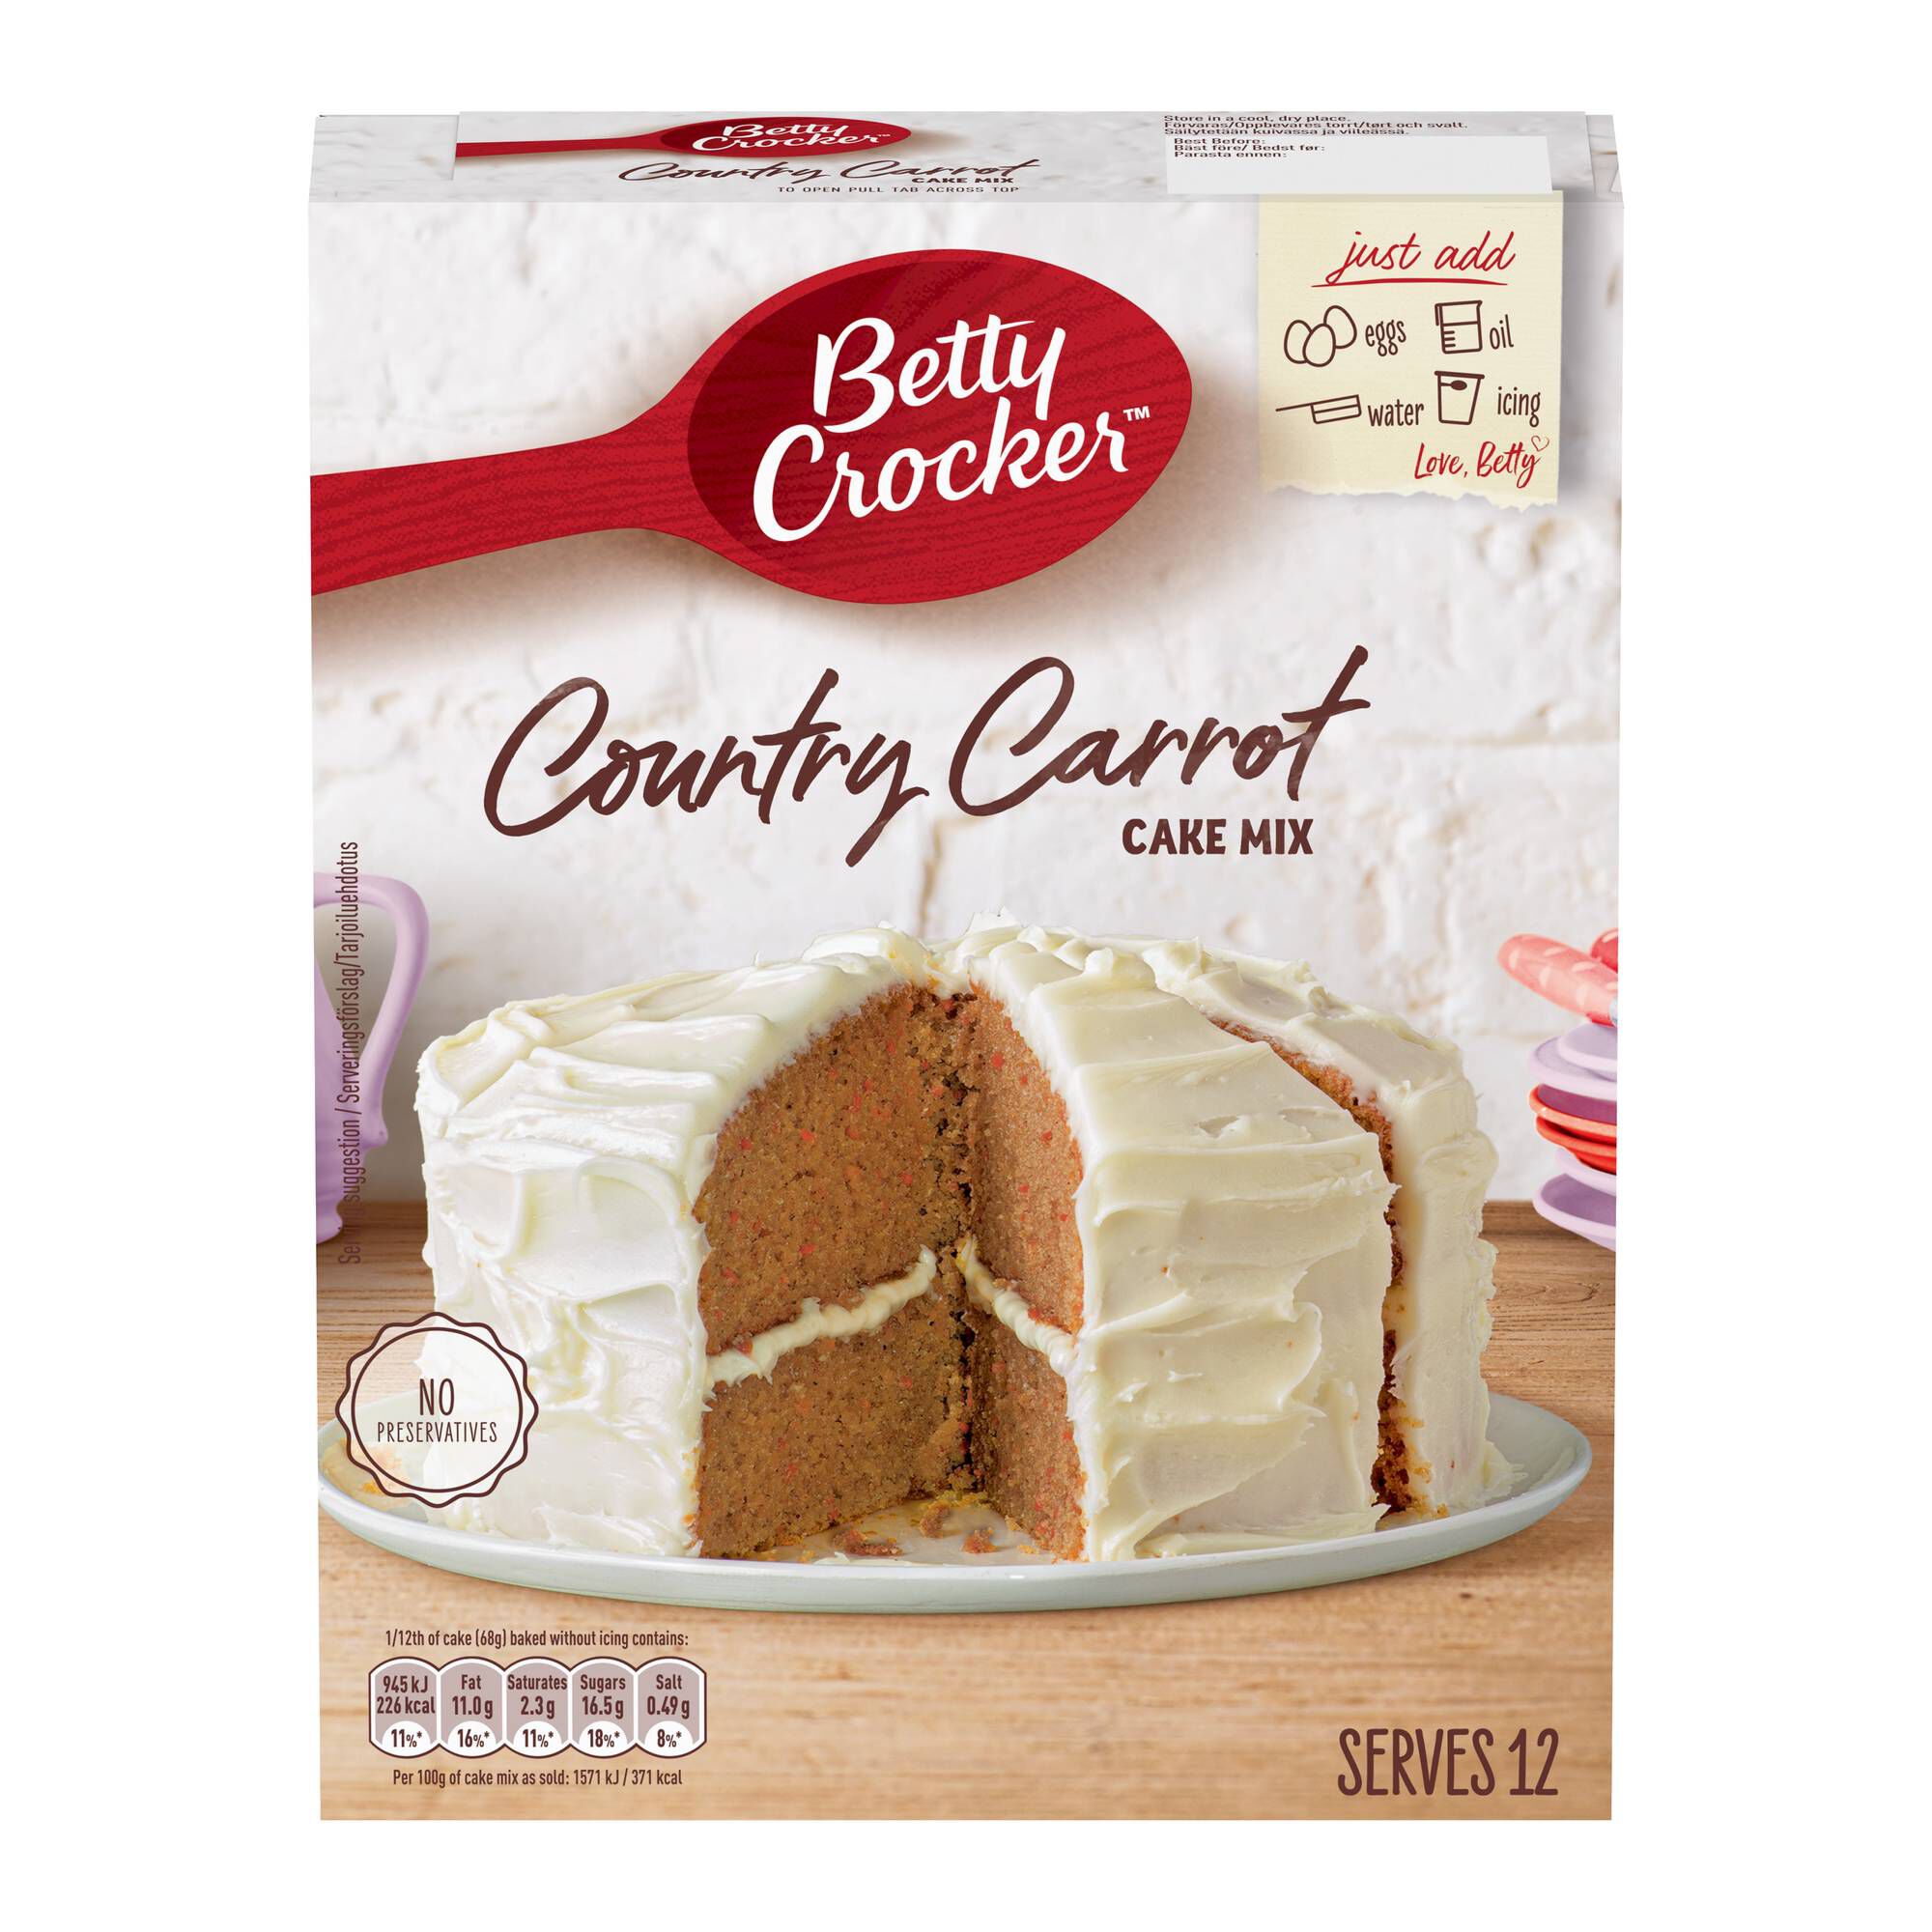 Betty Crocker cake mixes recalled for E. coli contamination | CBC News